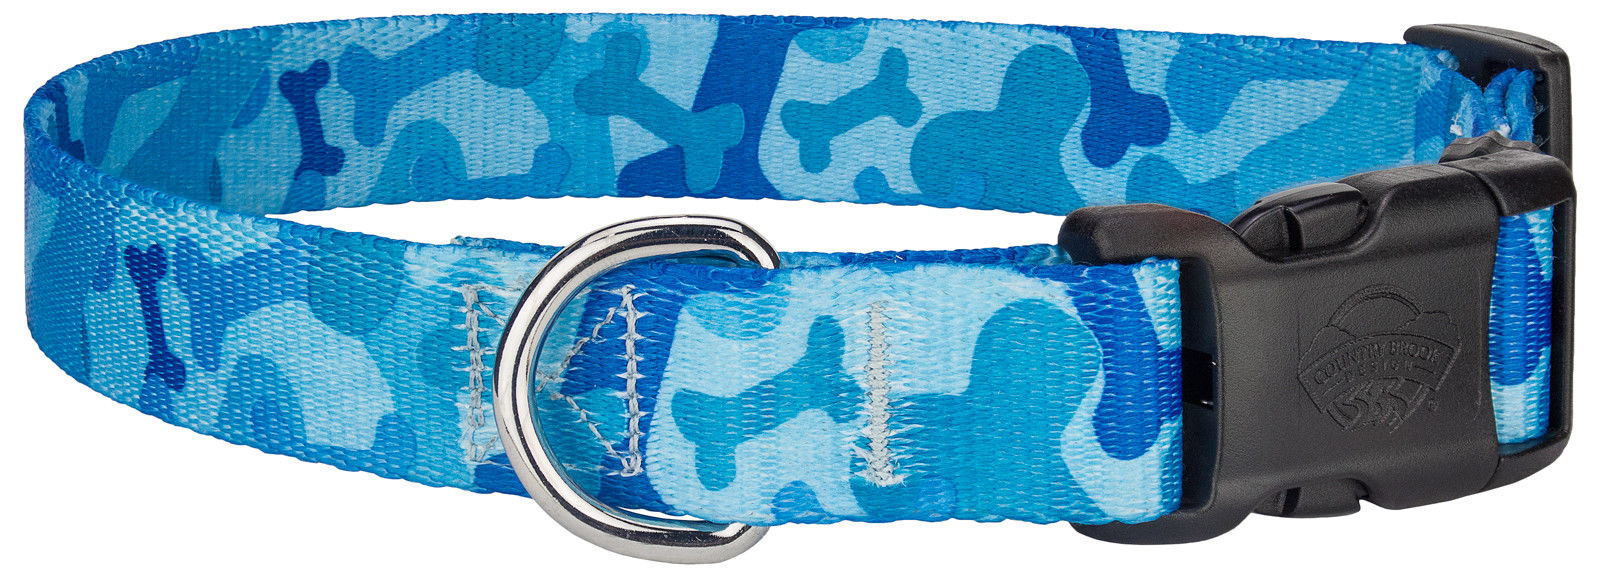 Country Brook Design Deluxe Dog Collar, XL, Blue Bone Camo, NWT, FREE SHIPPING